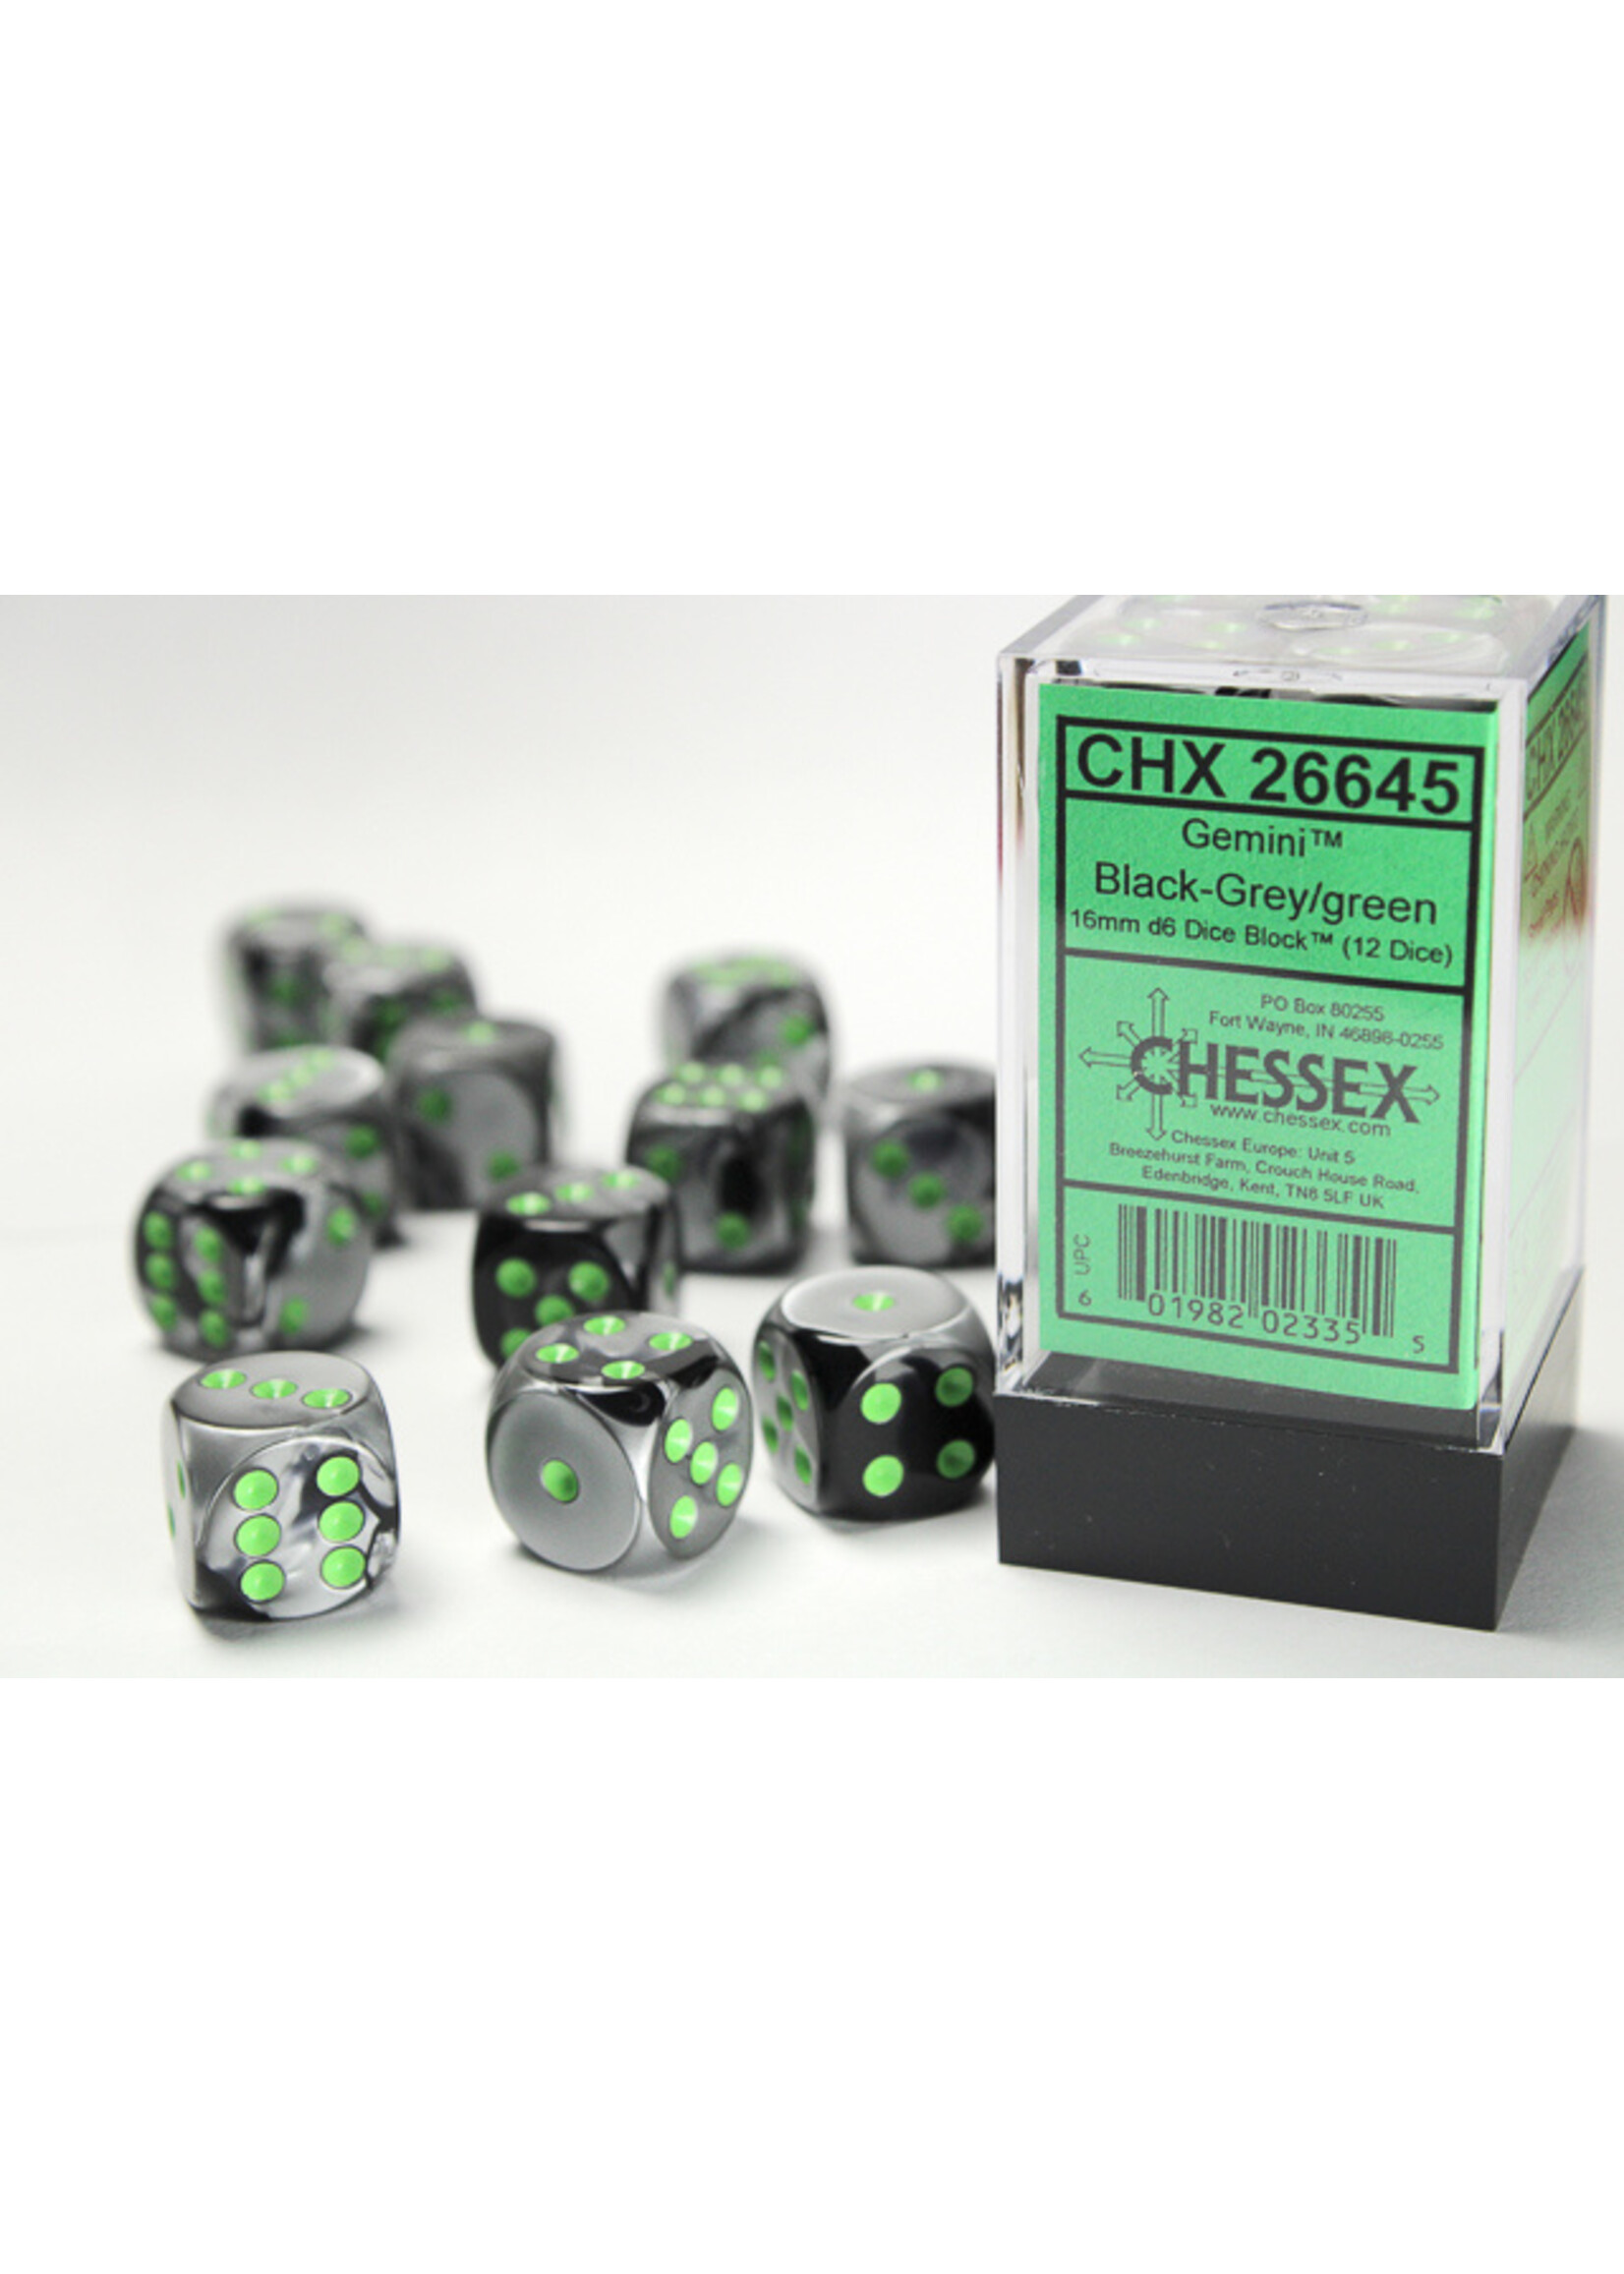 Chessex GMNI 12d6 black-grey/green